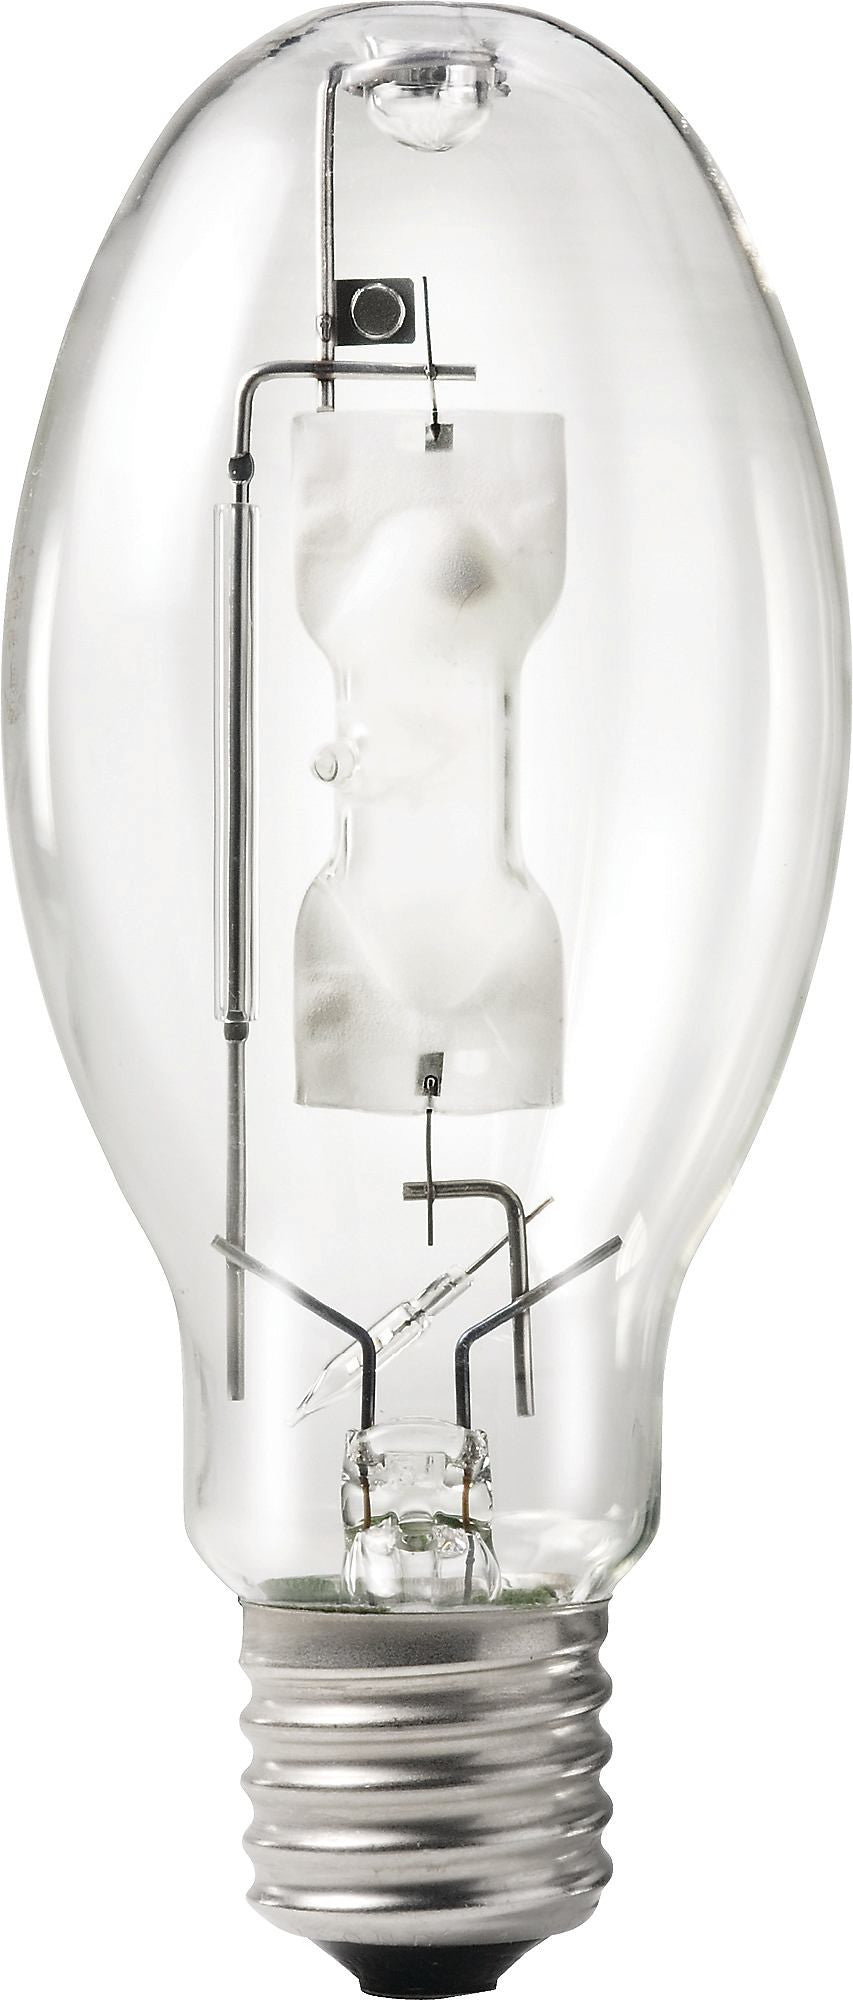 Philips 250w ED28 Clear Pulse Start 4300k HID Light Bulb